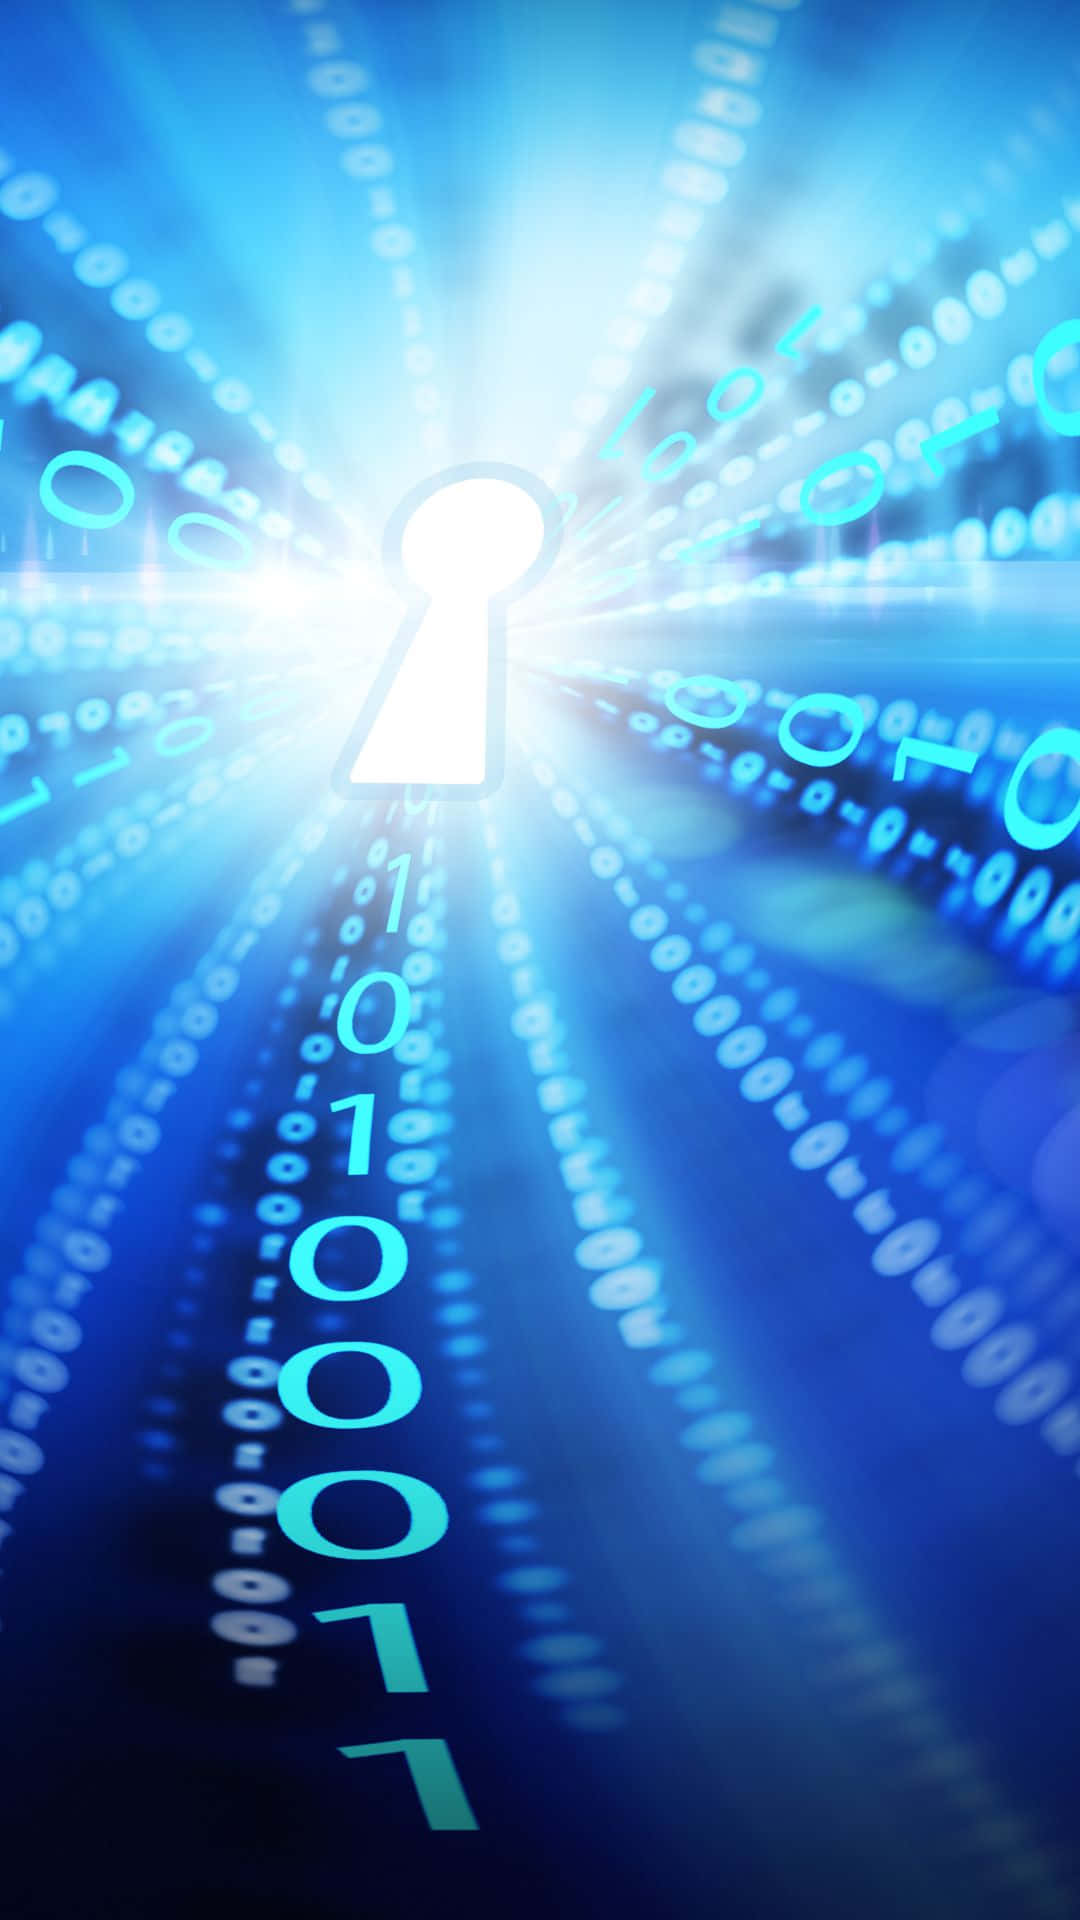 Digital Security Key Concept Background